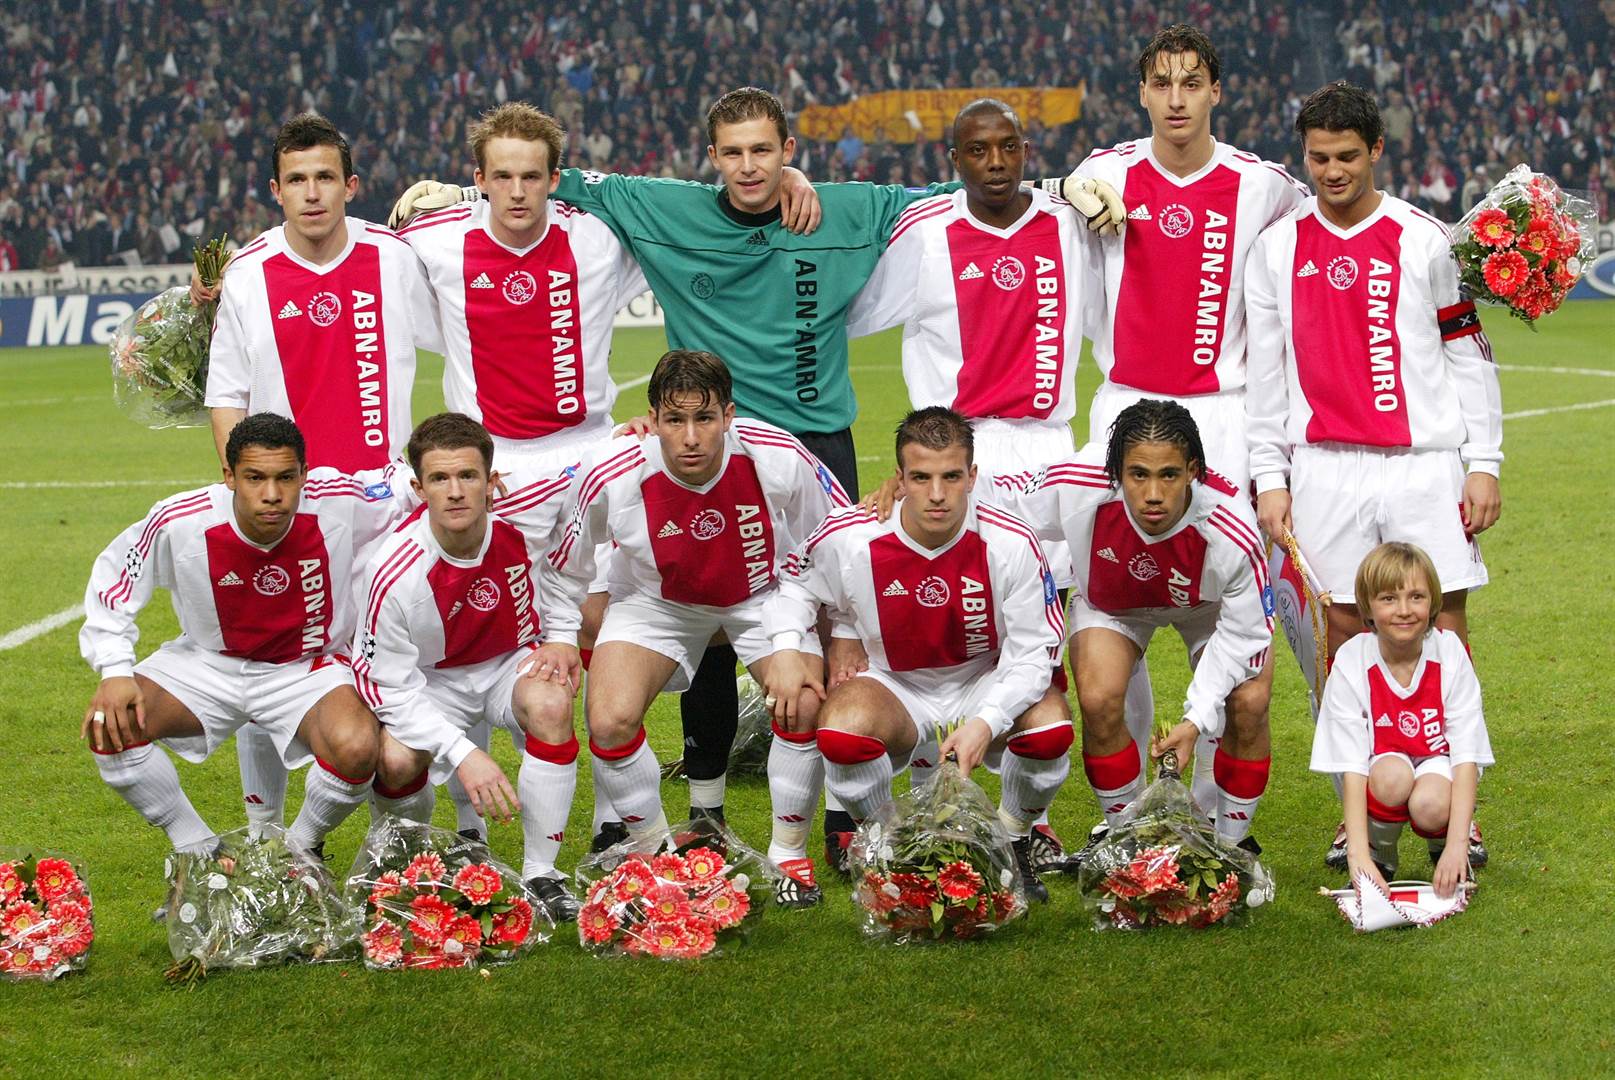 Steven Pienaar (AFC Ajax) - 2001/02, 2003/04 Eredi